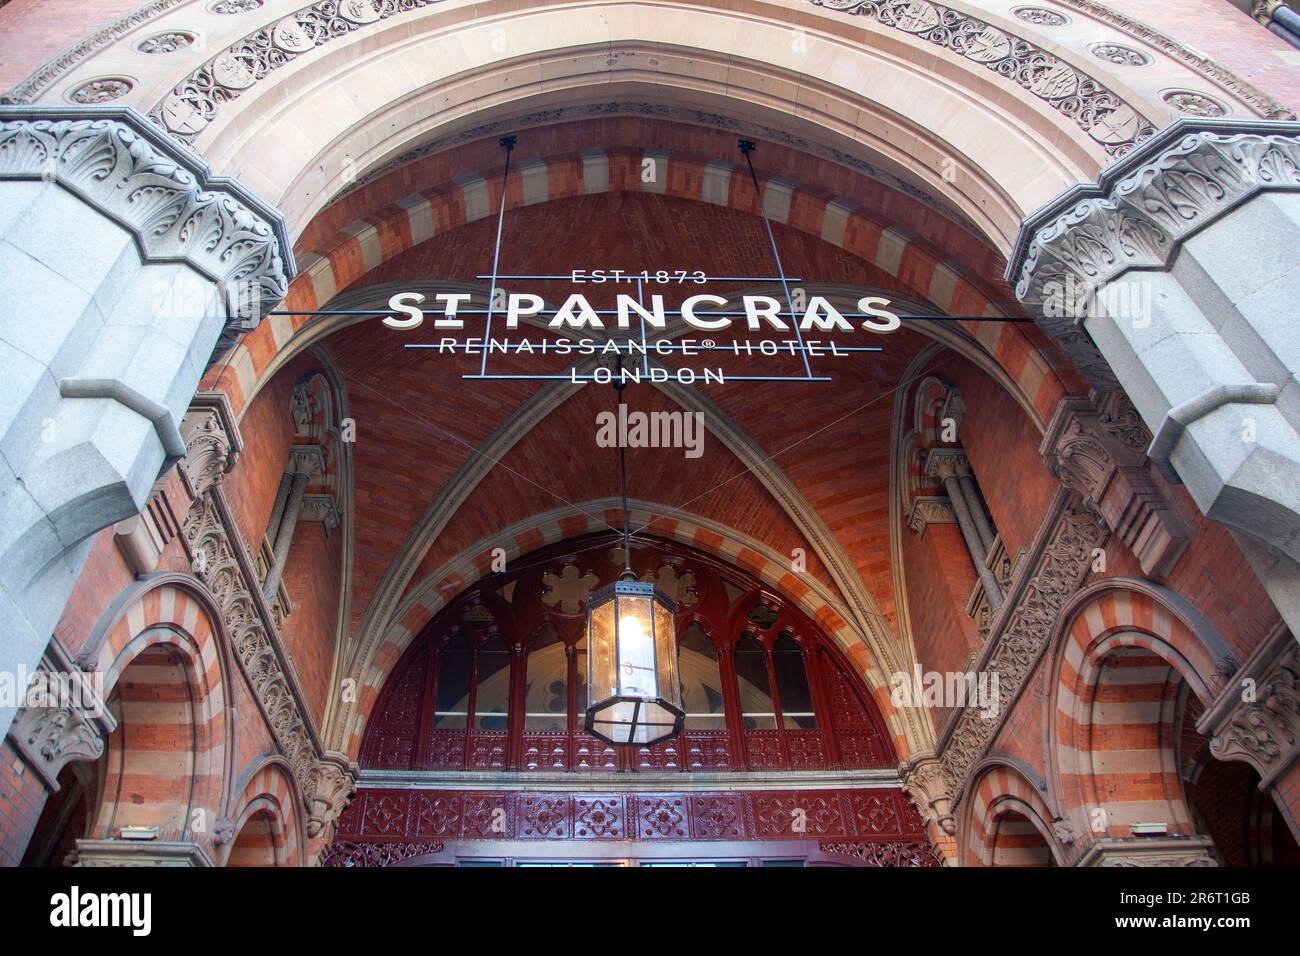 St Pancras Renaissance Hotel in Kings Cross - London UK Stock Photo